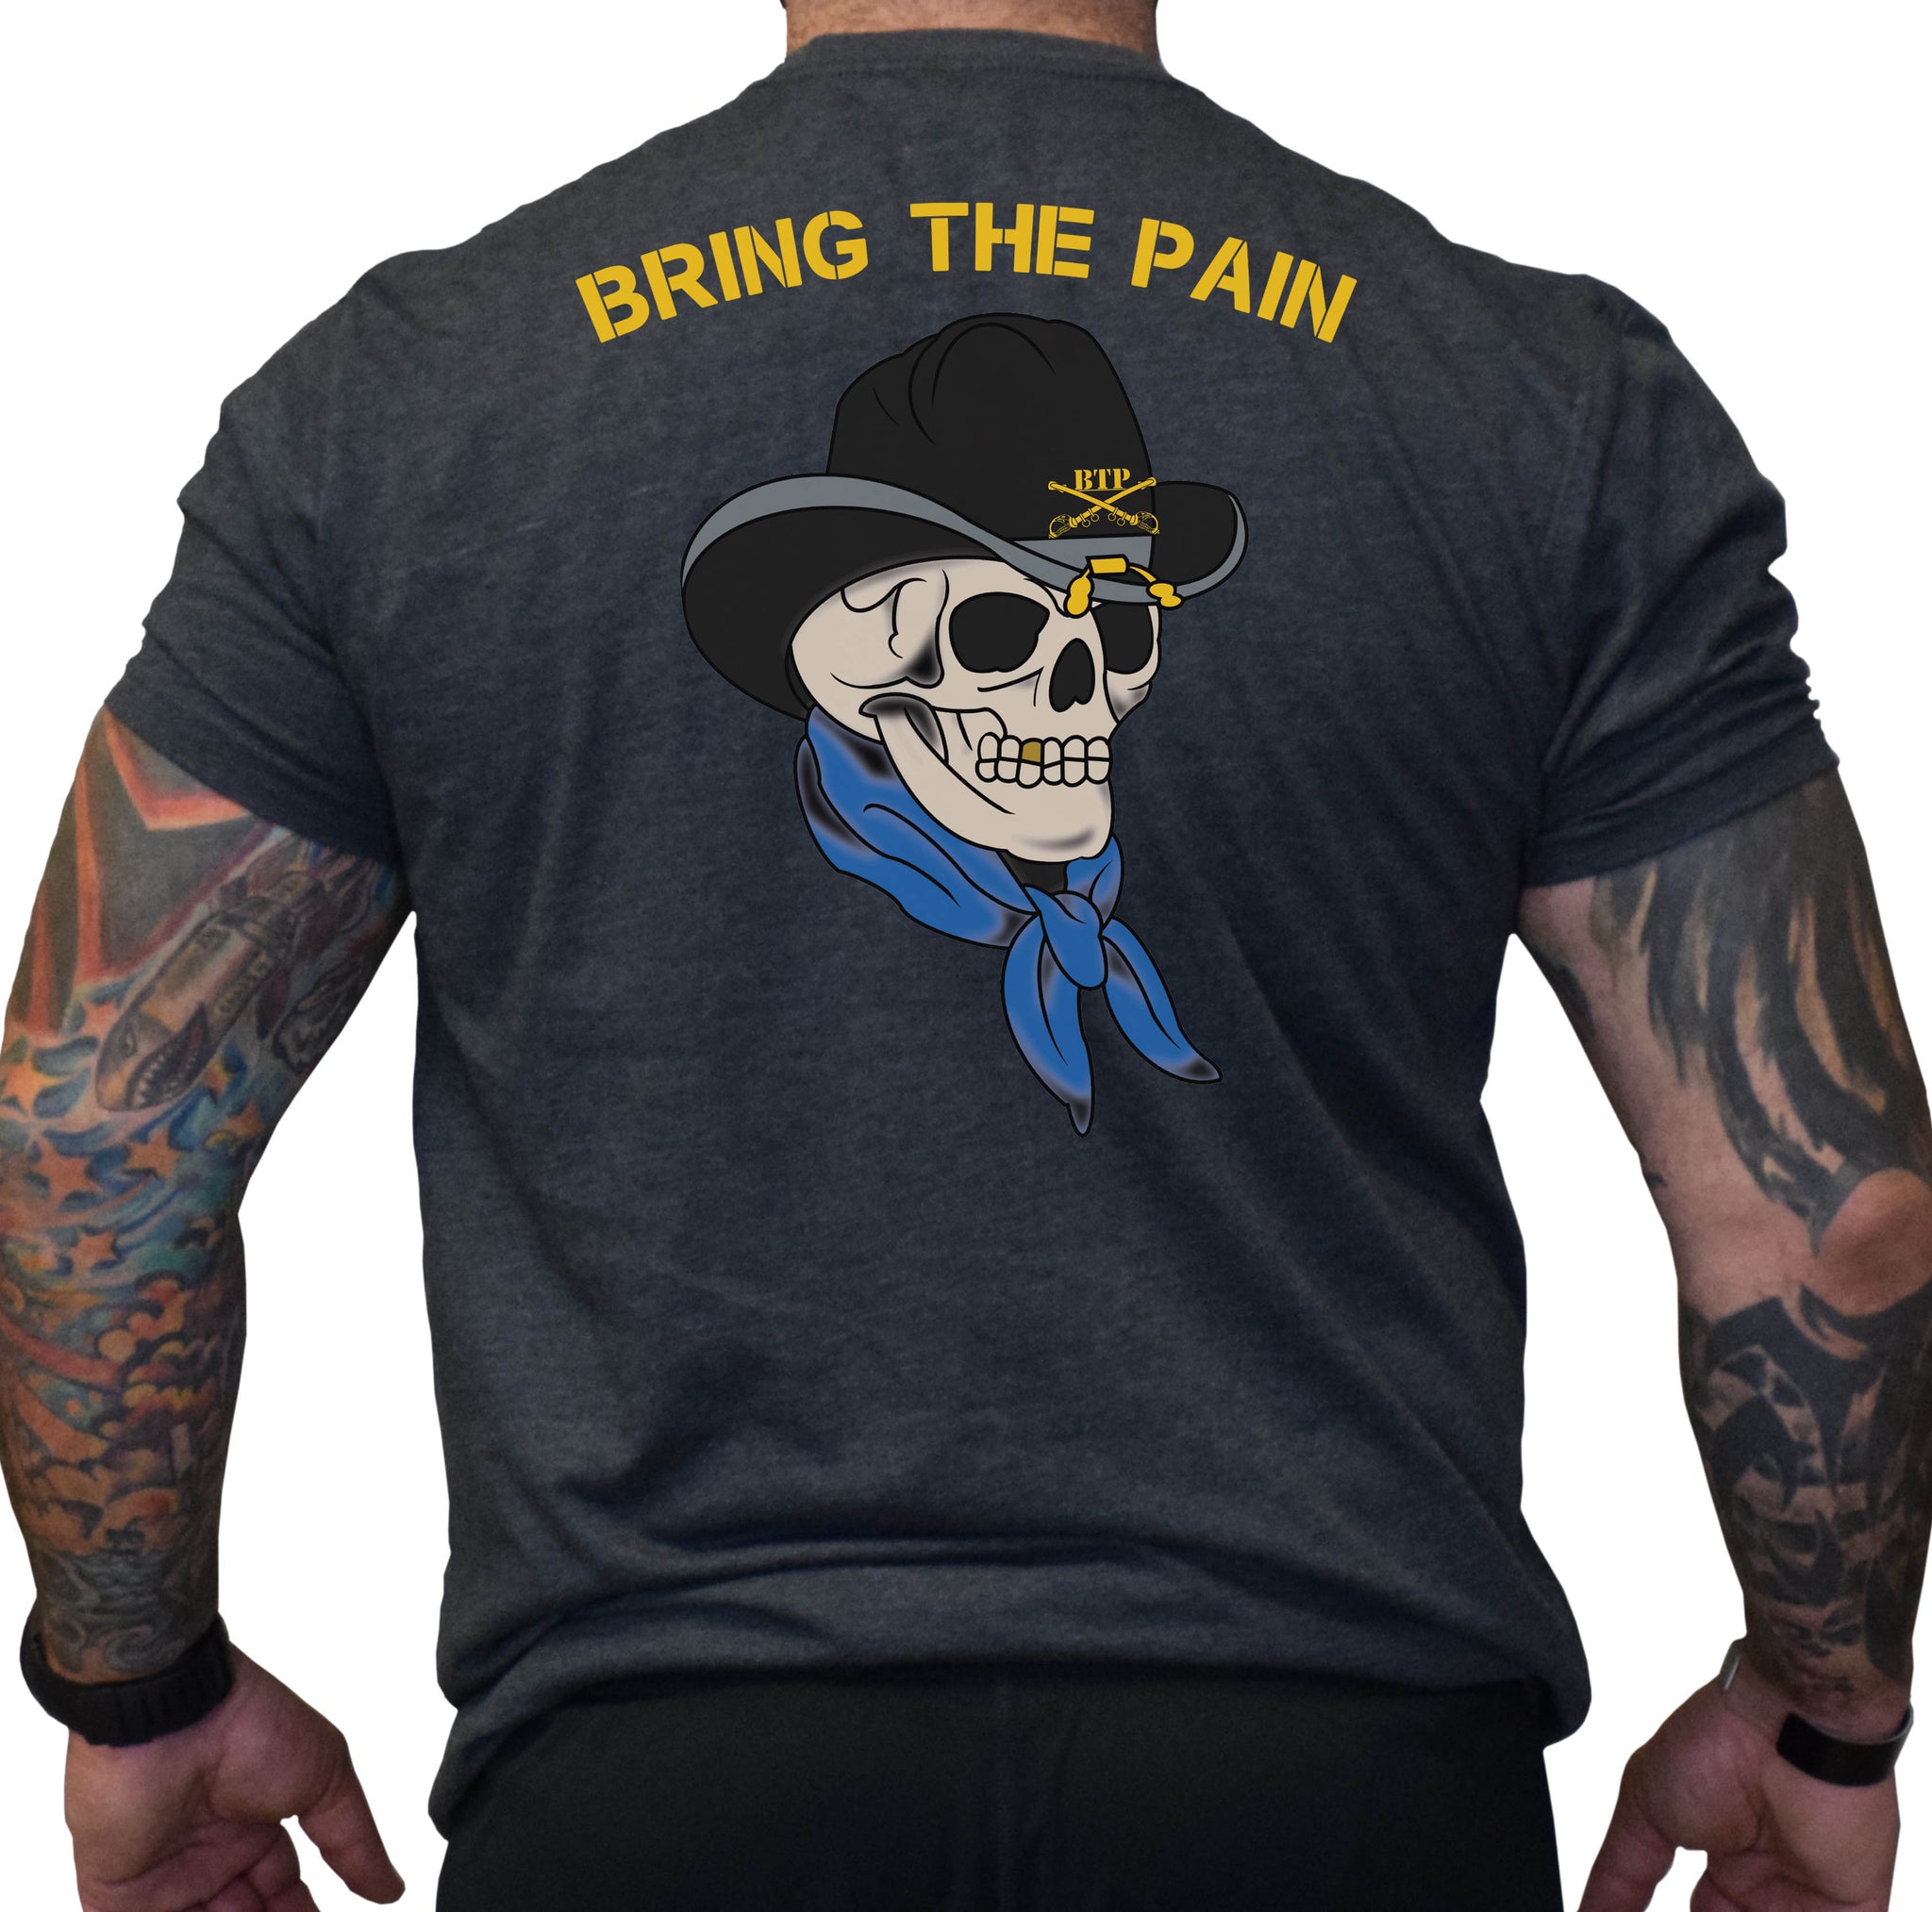 Bring The Pain 3-8 B Co Shirt